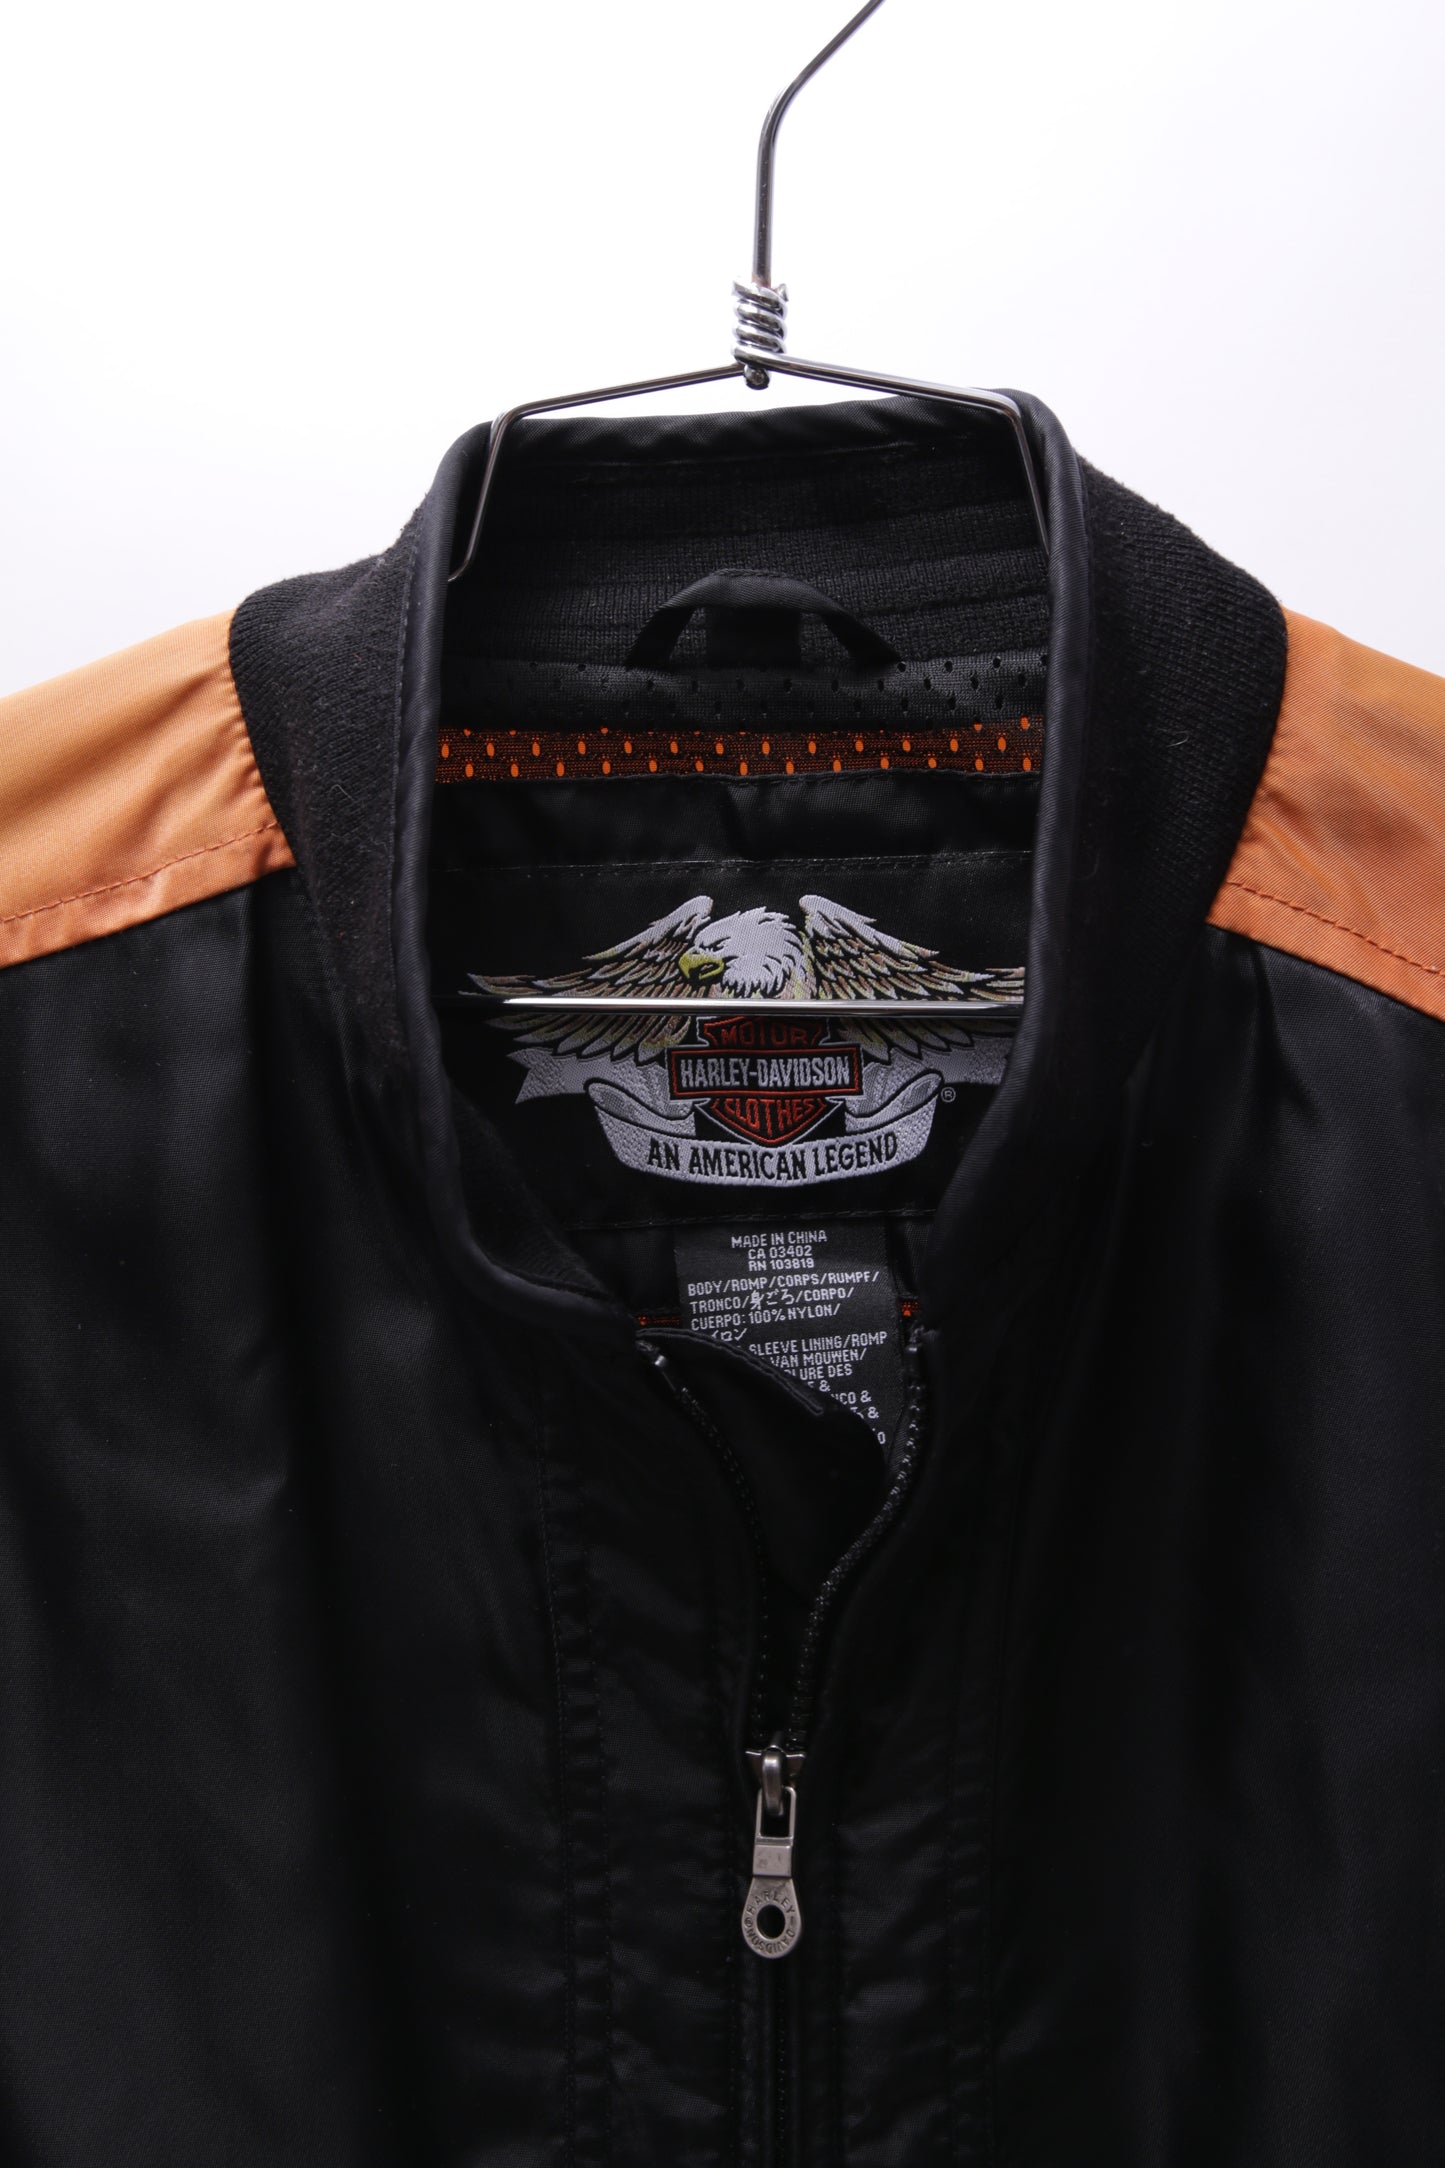 2007 Harley Davidson nylon jacket in classic colors